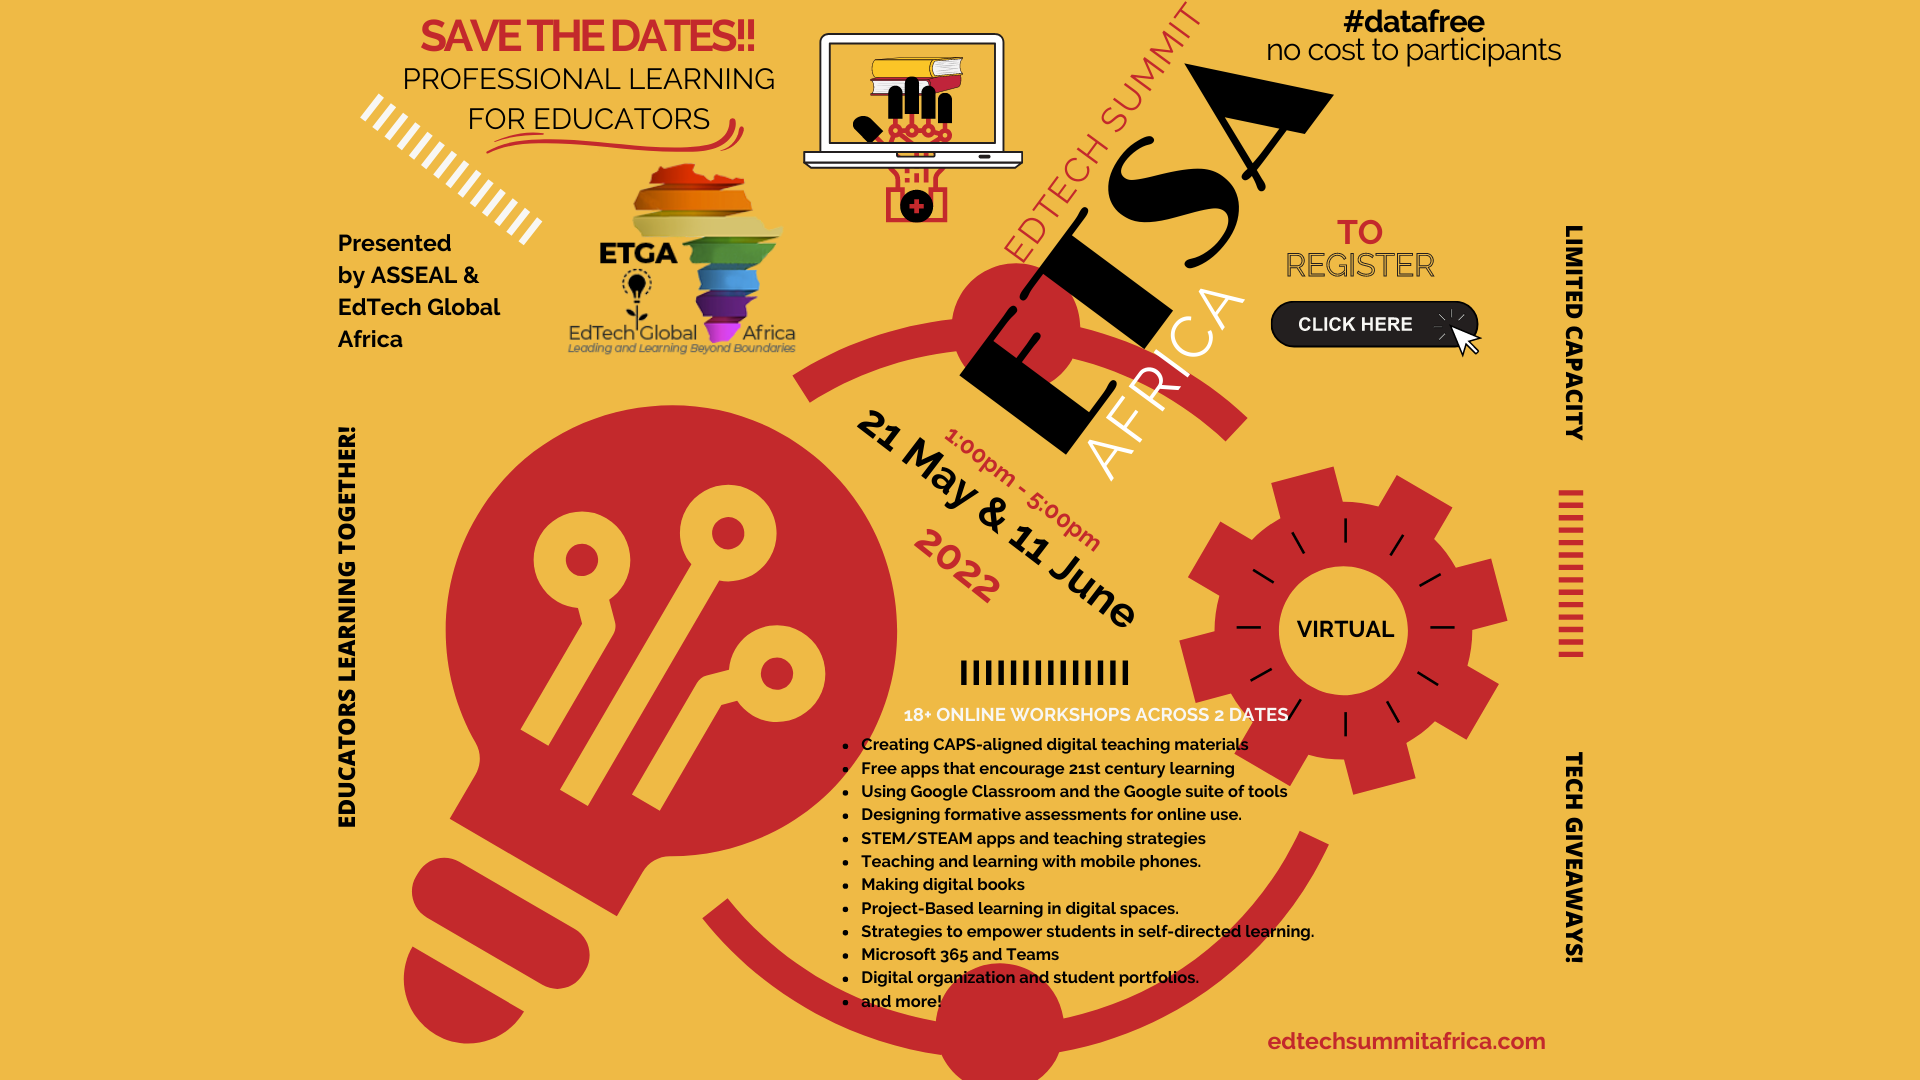 EdTech Summit Africa event poster